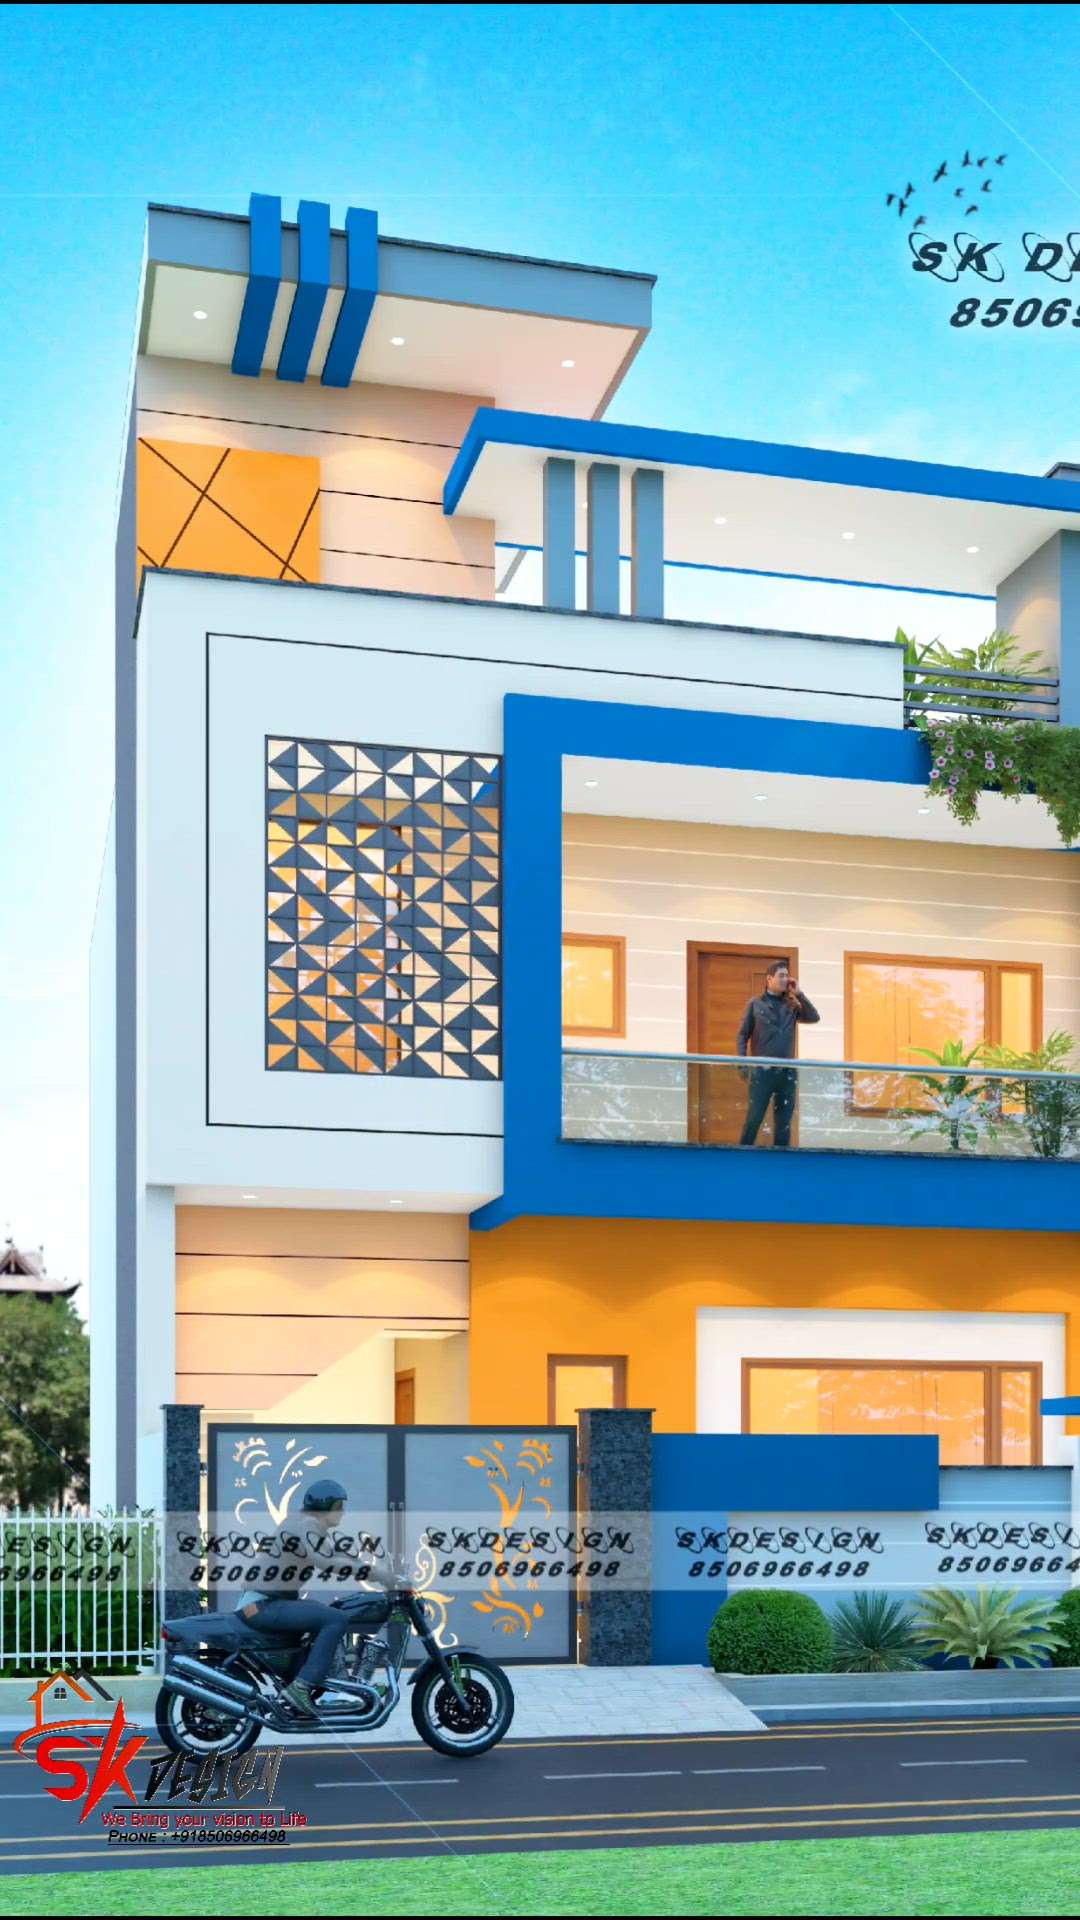 beautiful home design 😍
#ElevationHome #HomeDecor #HouseDesigns #HouseConstruction #3d #Architect #FrontDoor #Shorts #reelsindia #skdesign666